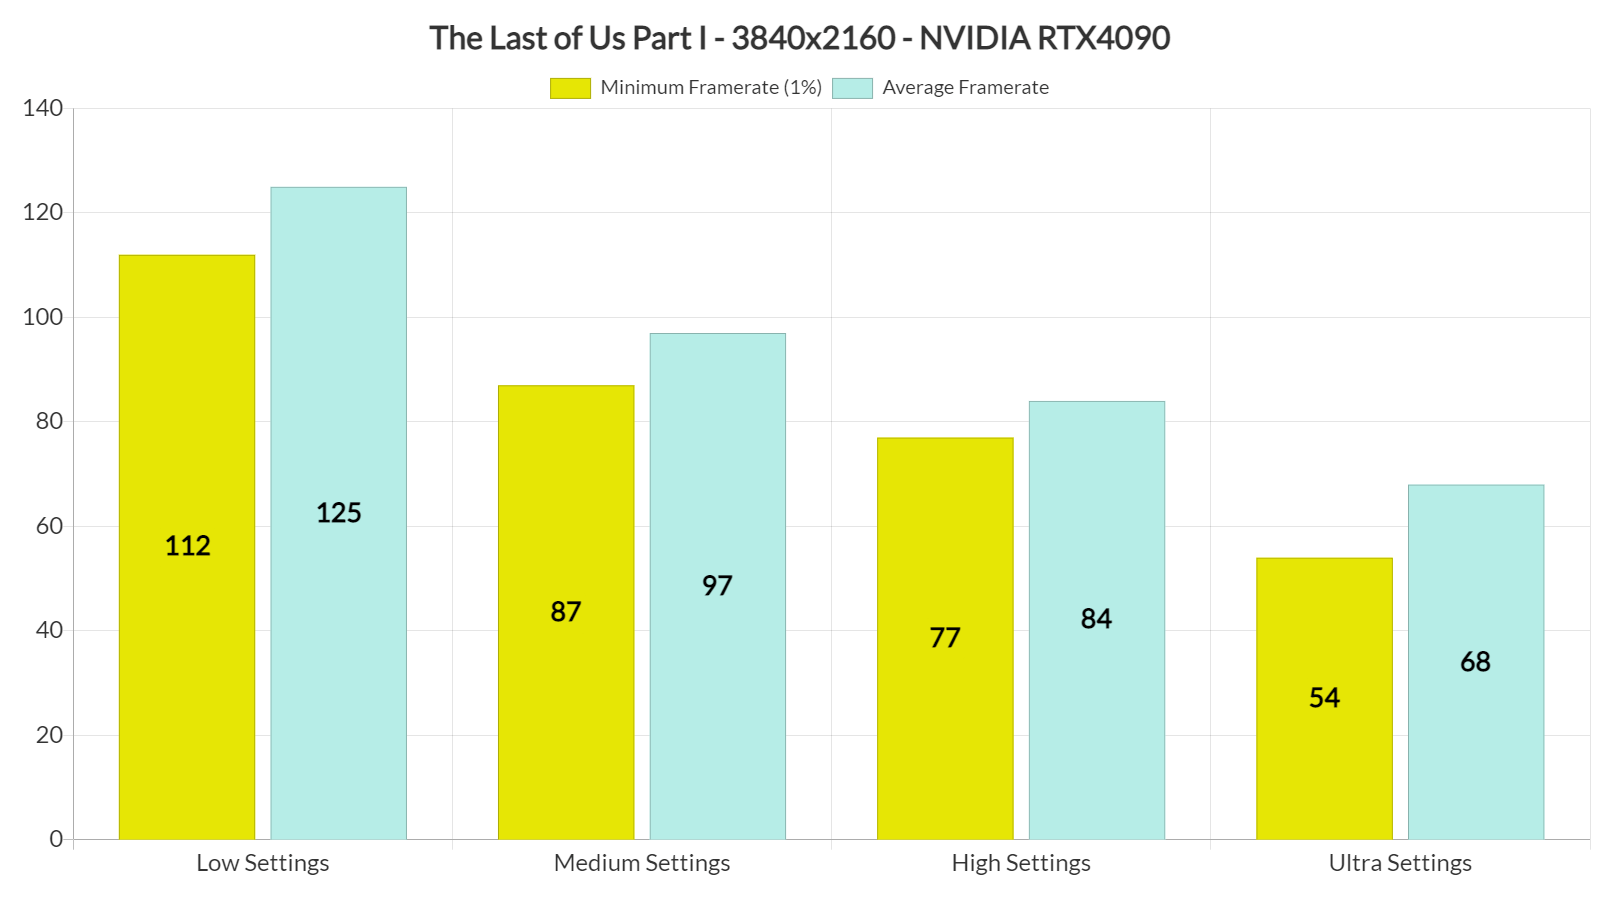 The Last of Us Part I PC - ULTRA vs Optimized Settings Comparison